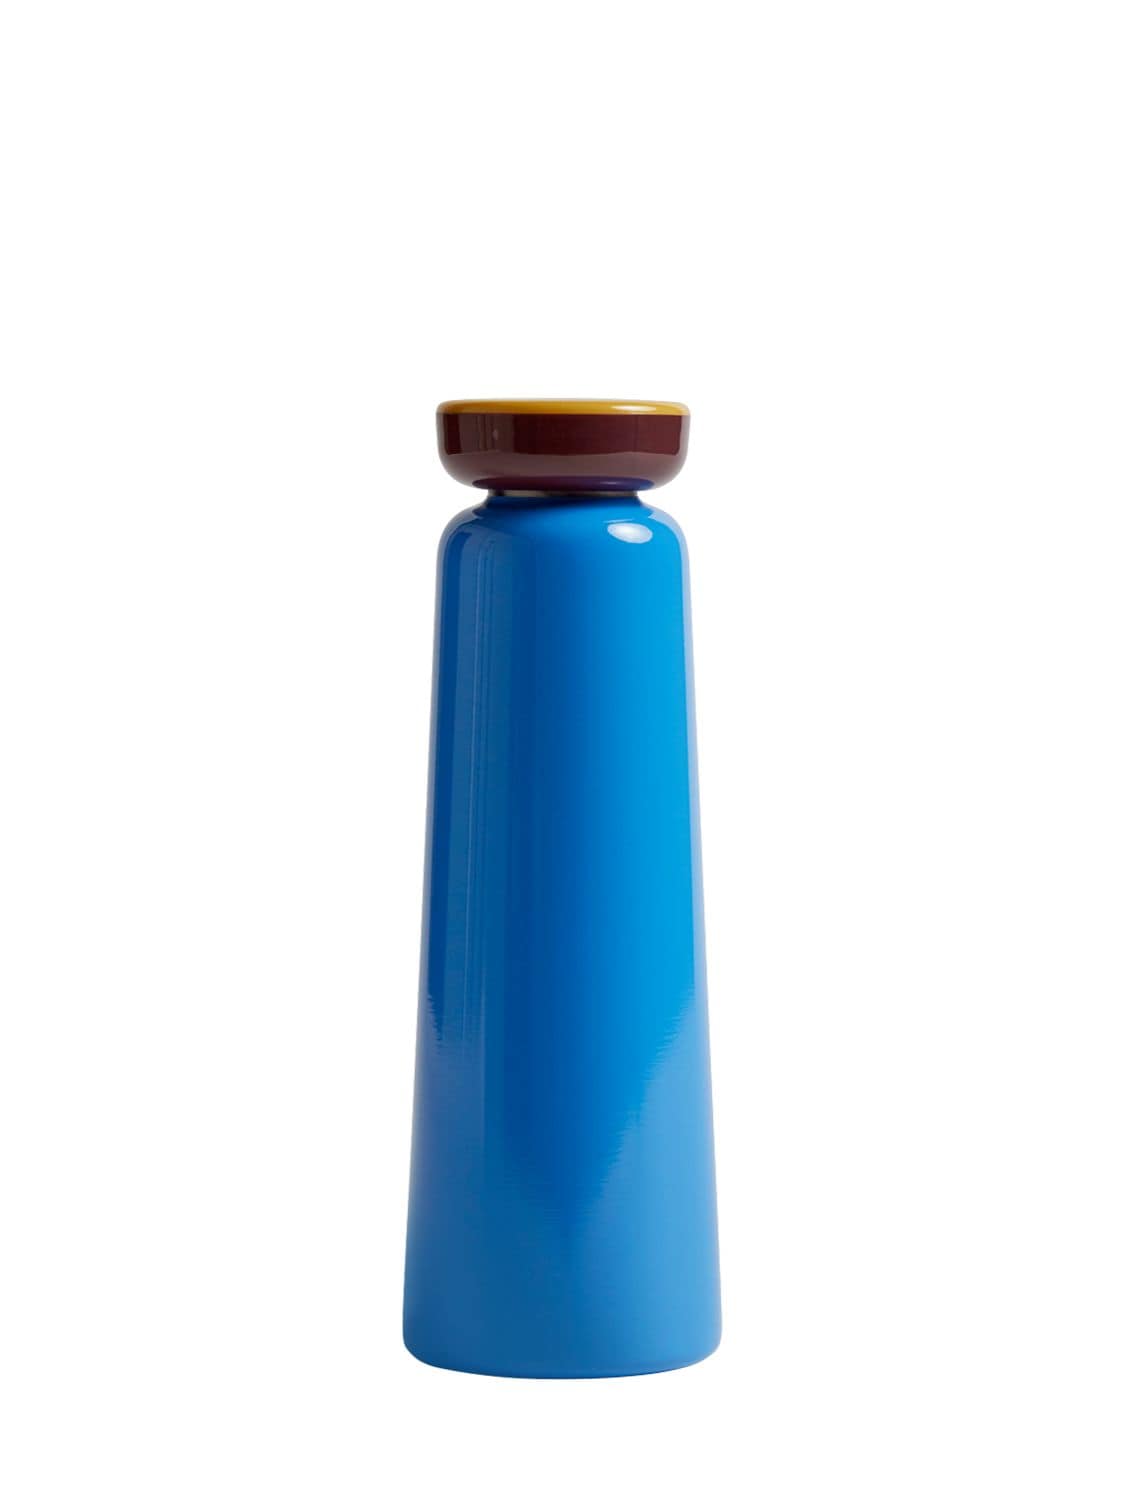 Hay George Sowden Bottle In Blue